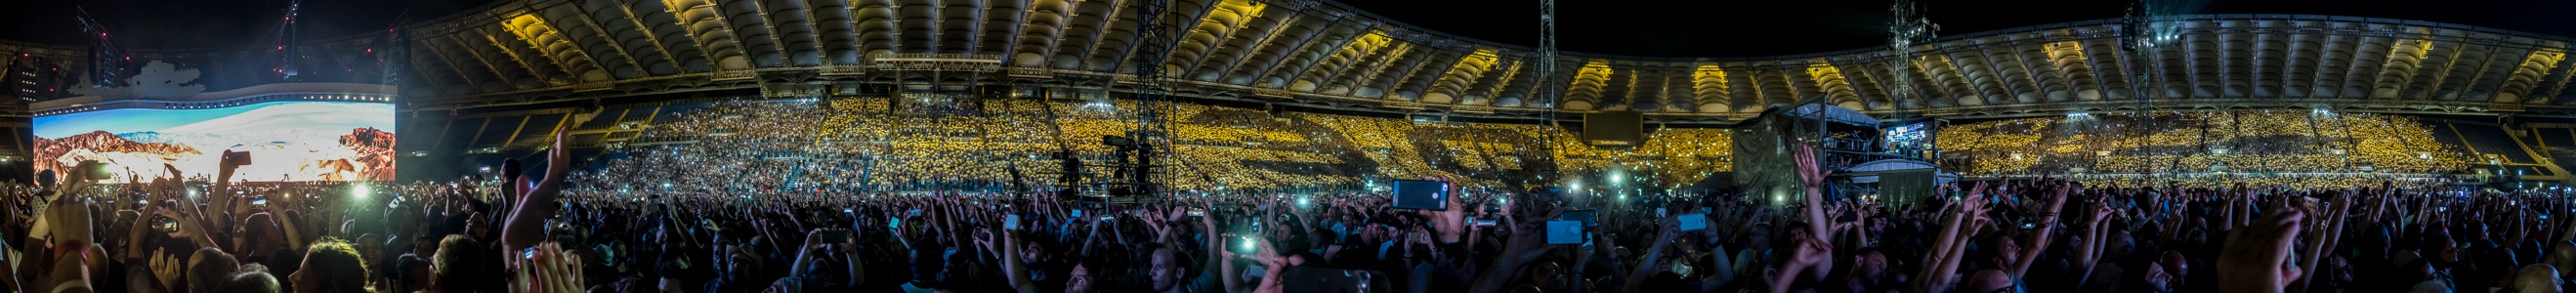 Stadio Olimpico (Olympiastadion): U2 (+ Noel Gallagher’s High Flying Birds) Rom